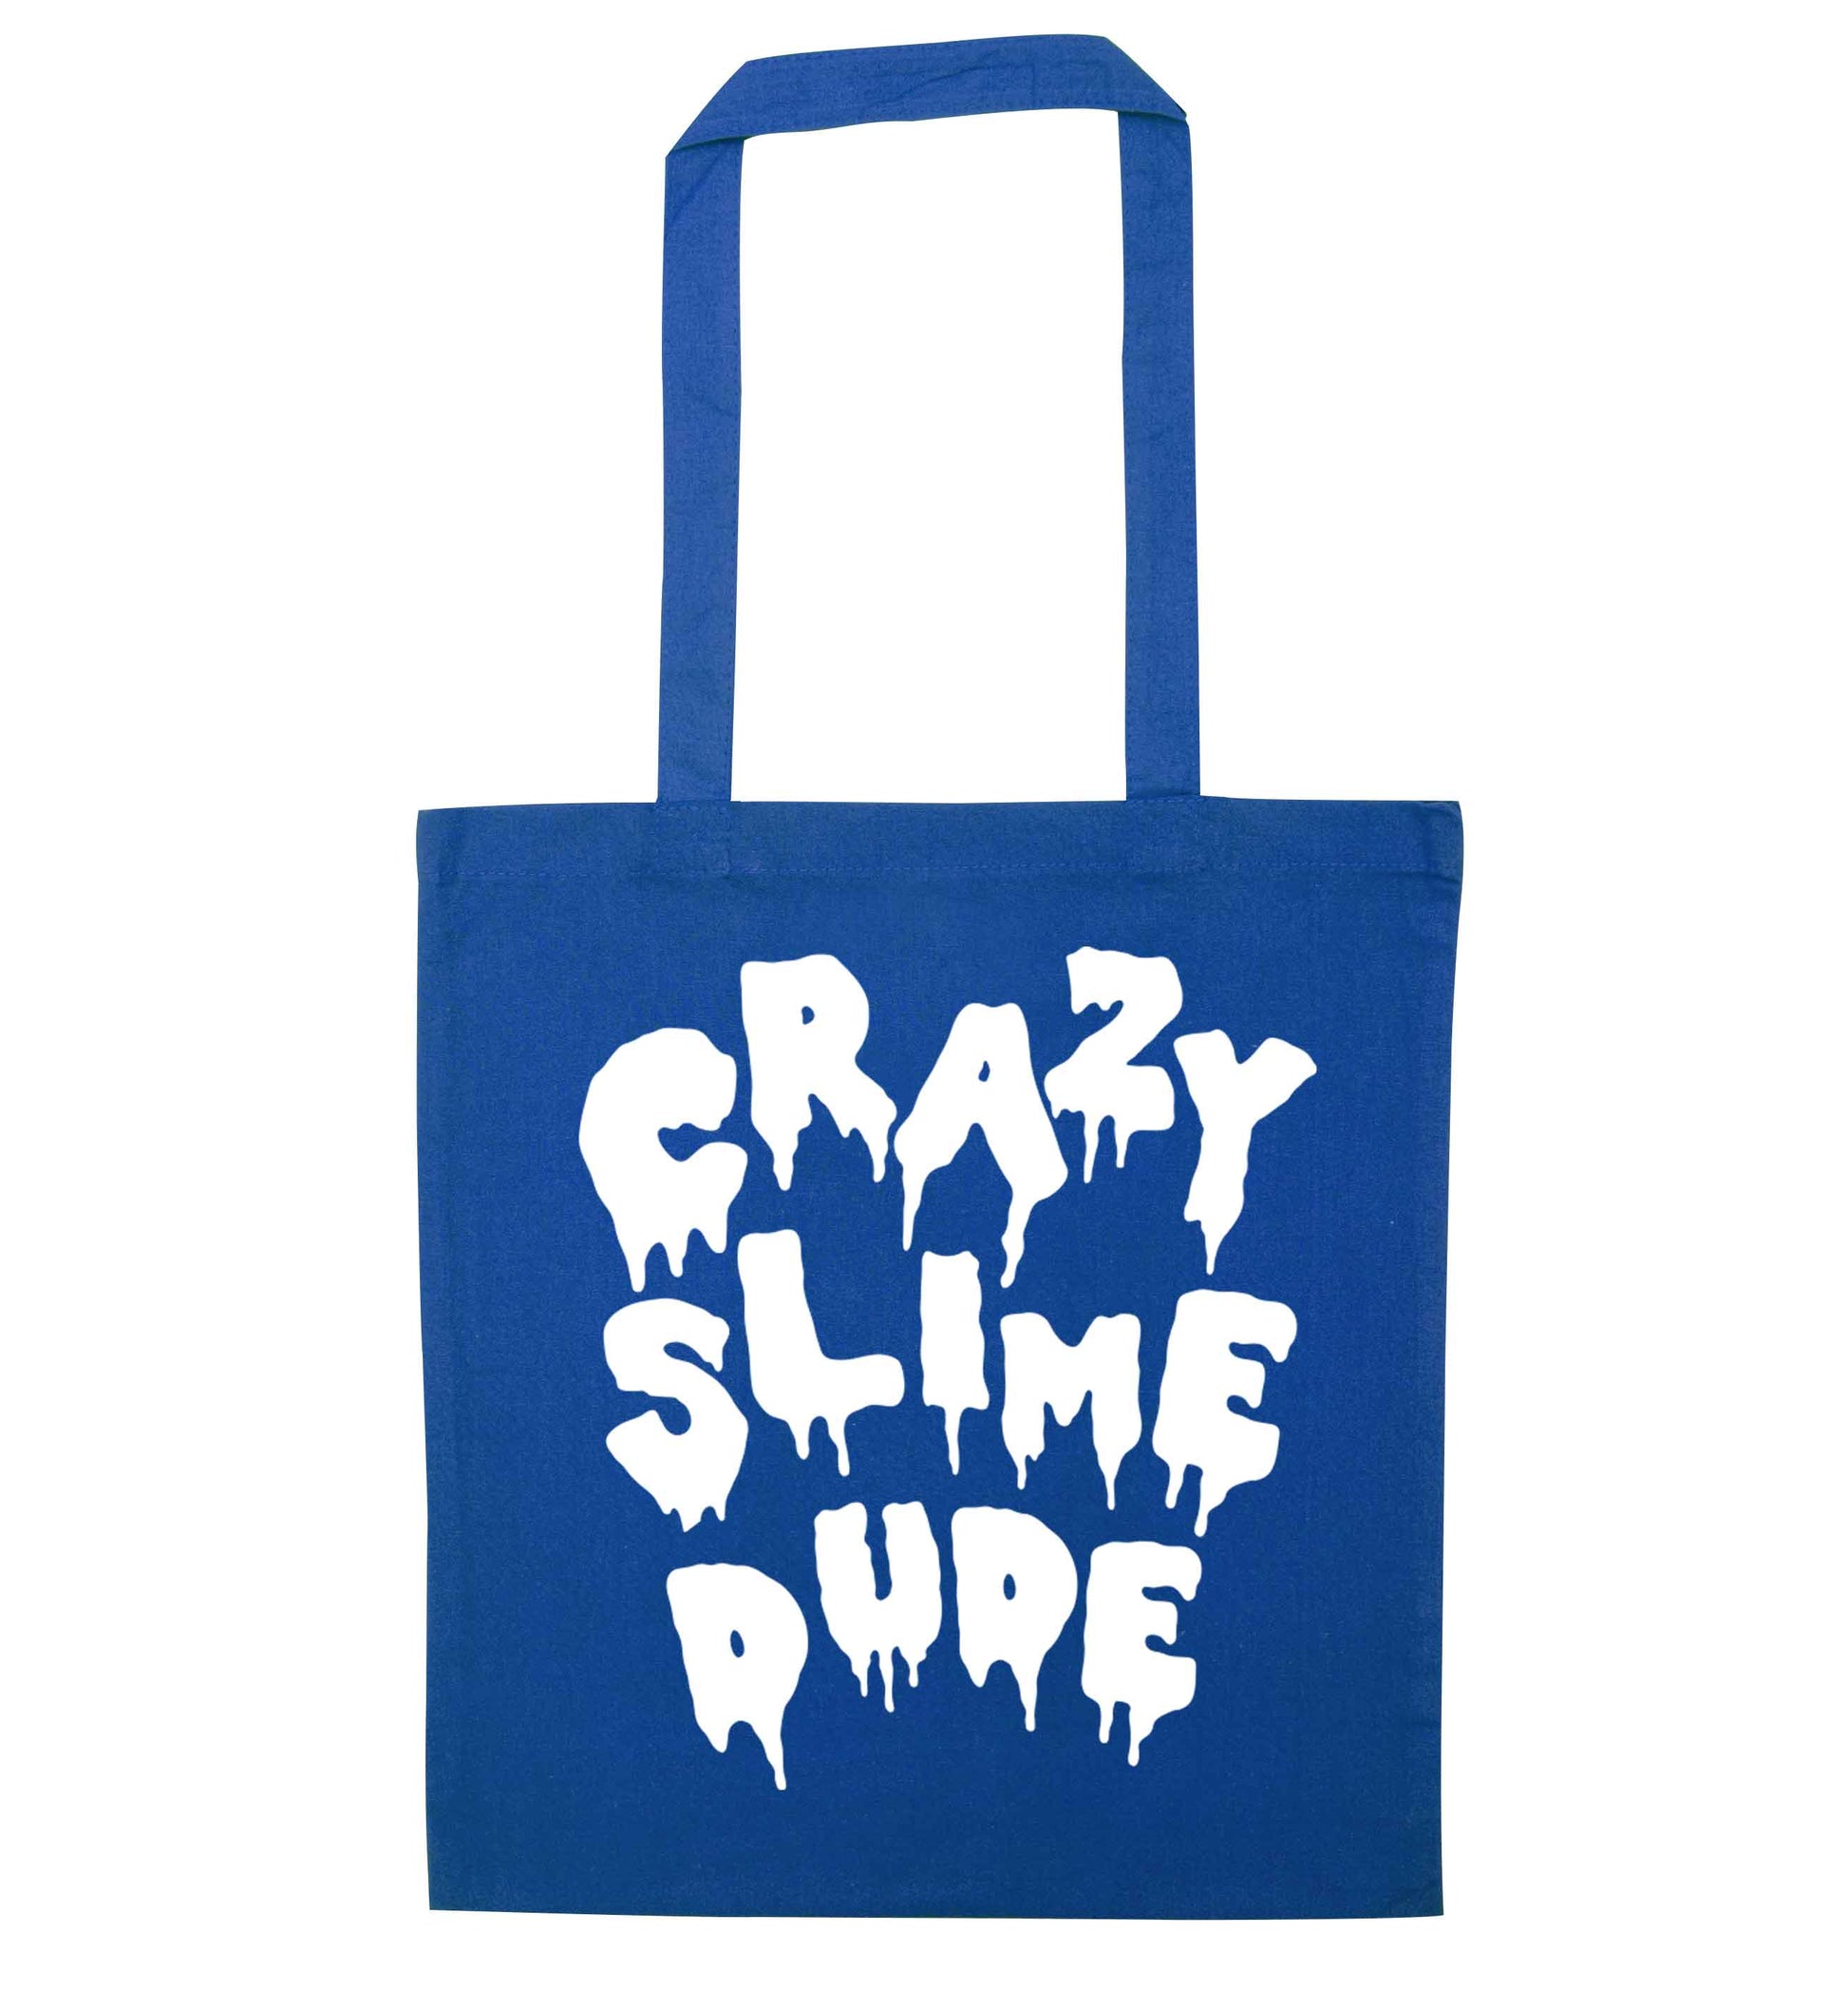 Crazy slime dude blue tote bag